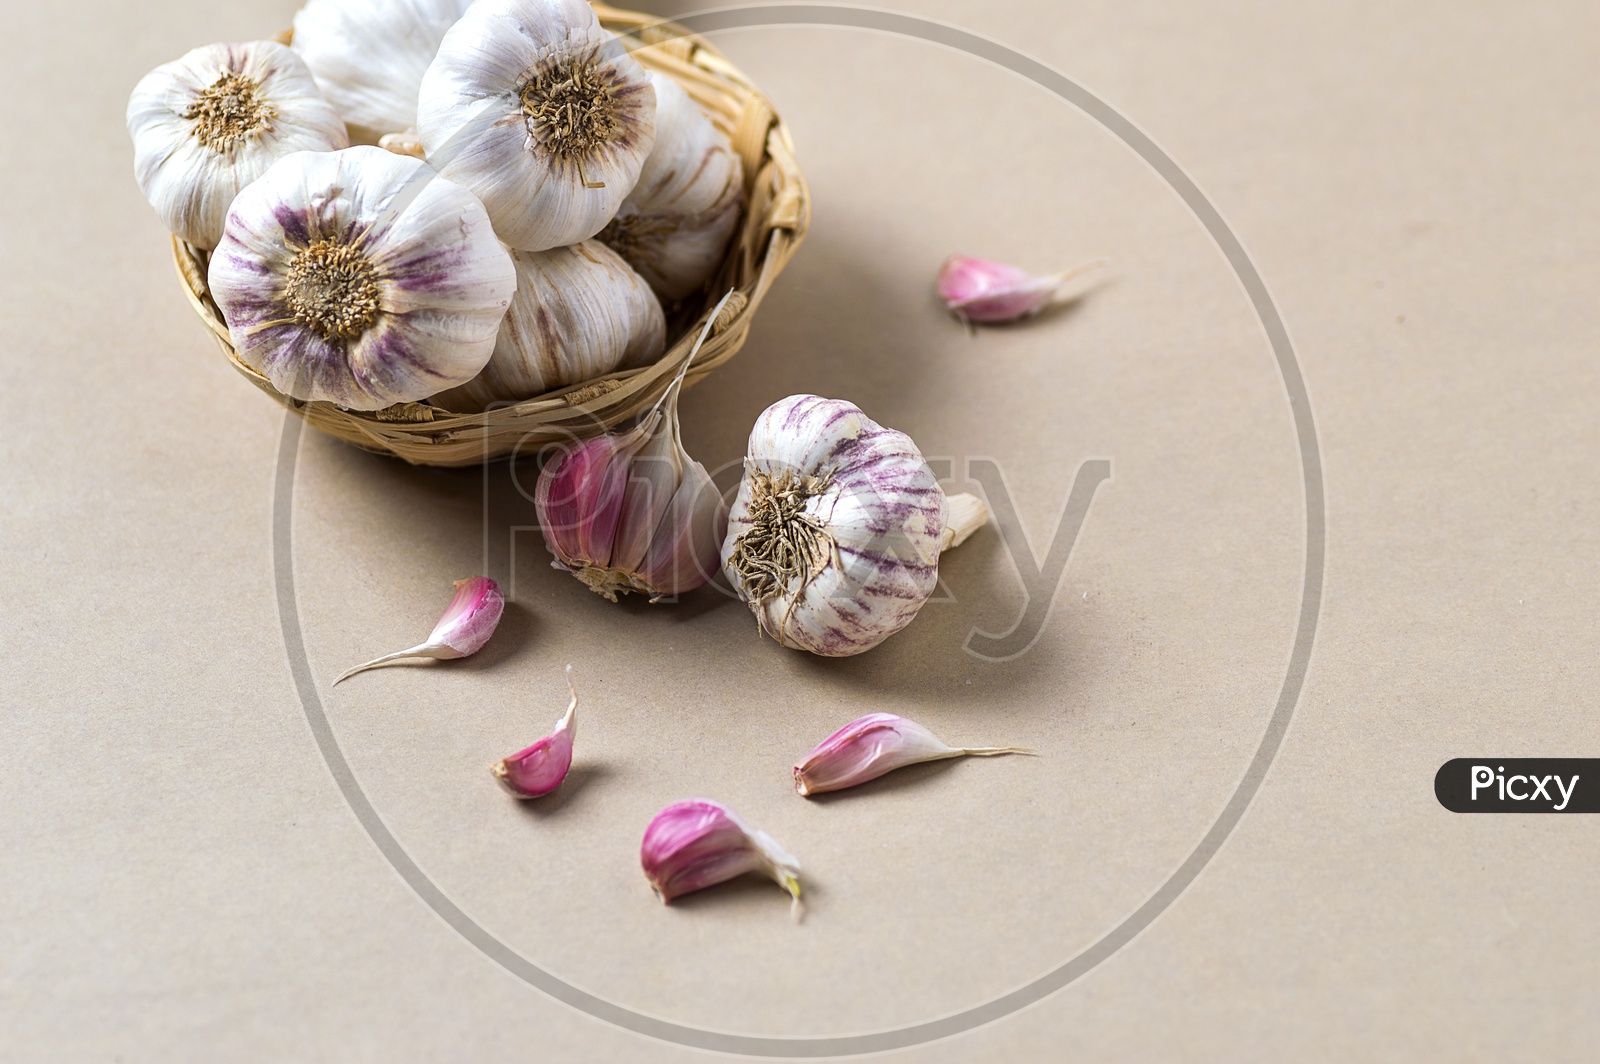 Garlic Cloves and Garlic Bulb in Basket